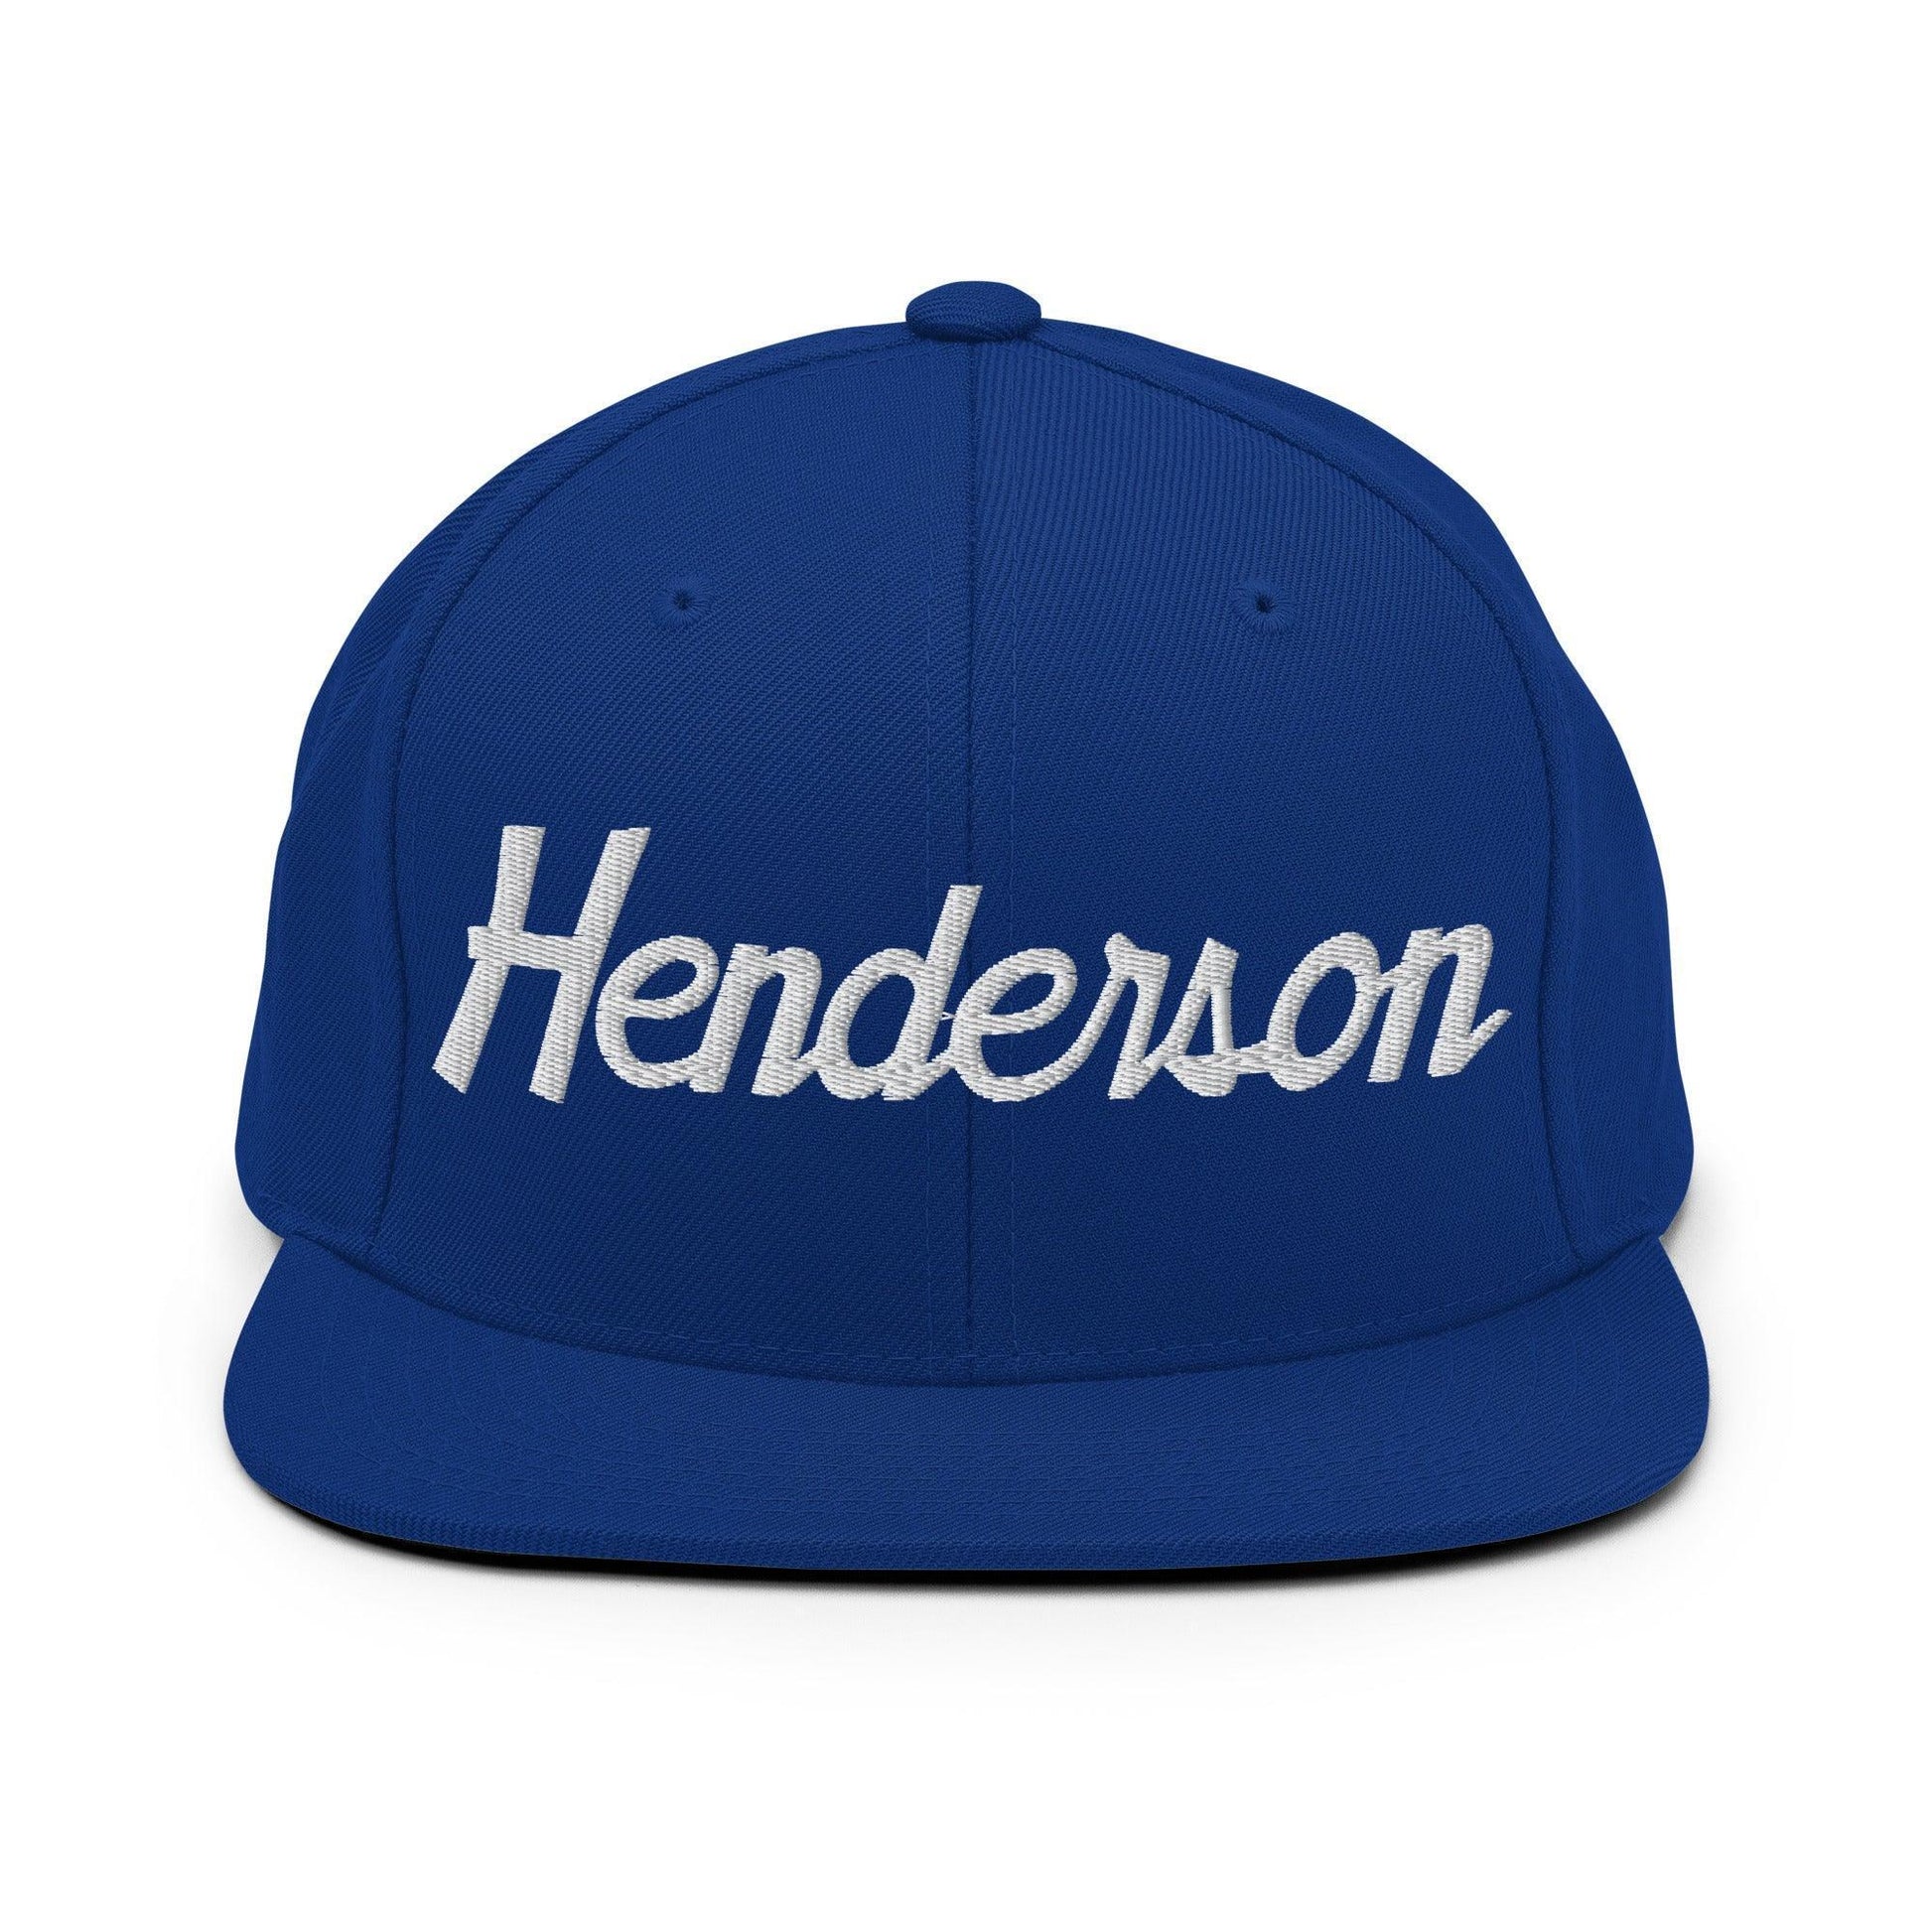 Henderson Script Snapback Hat Royal Blue